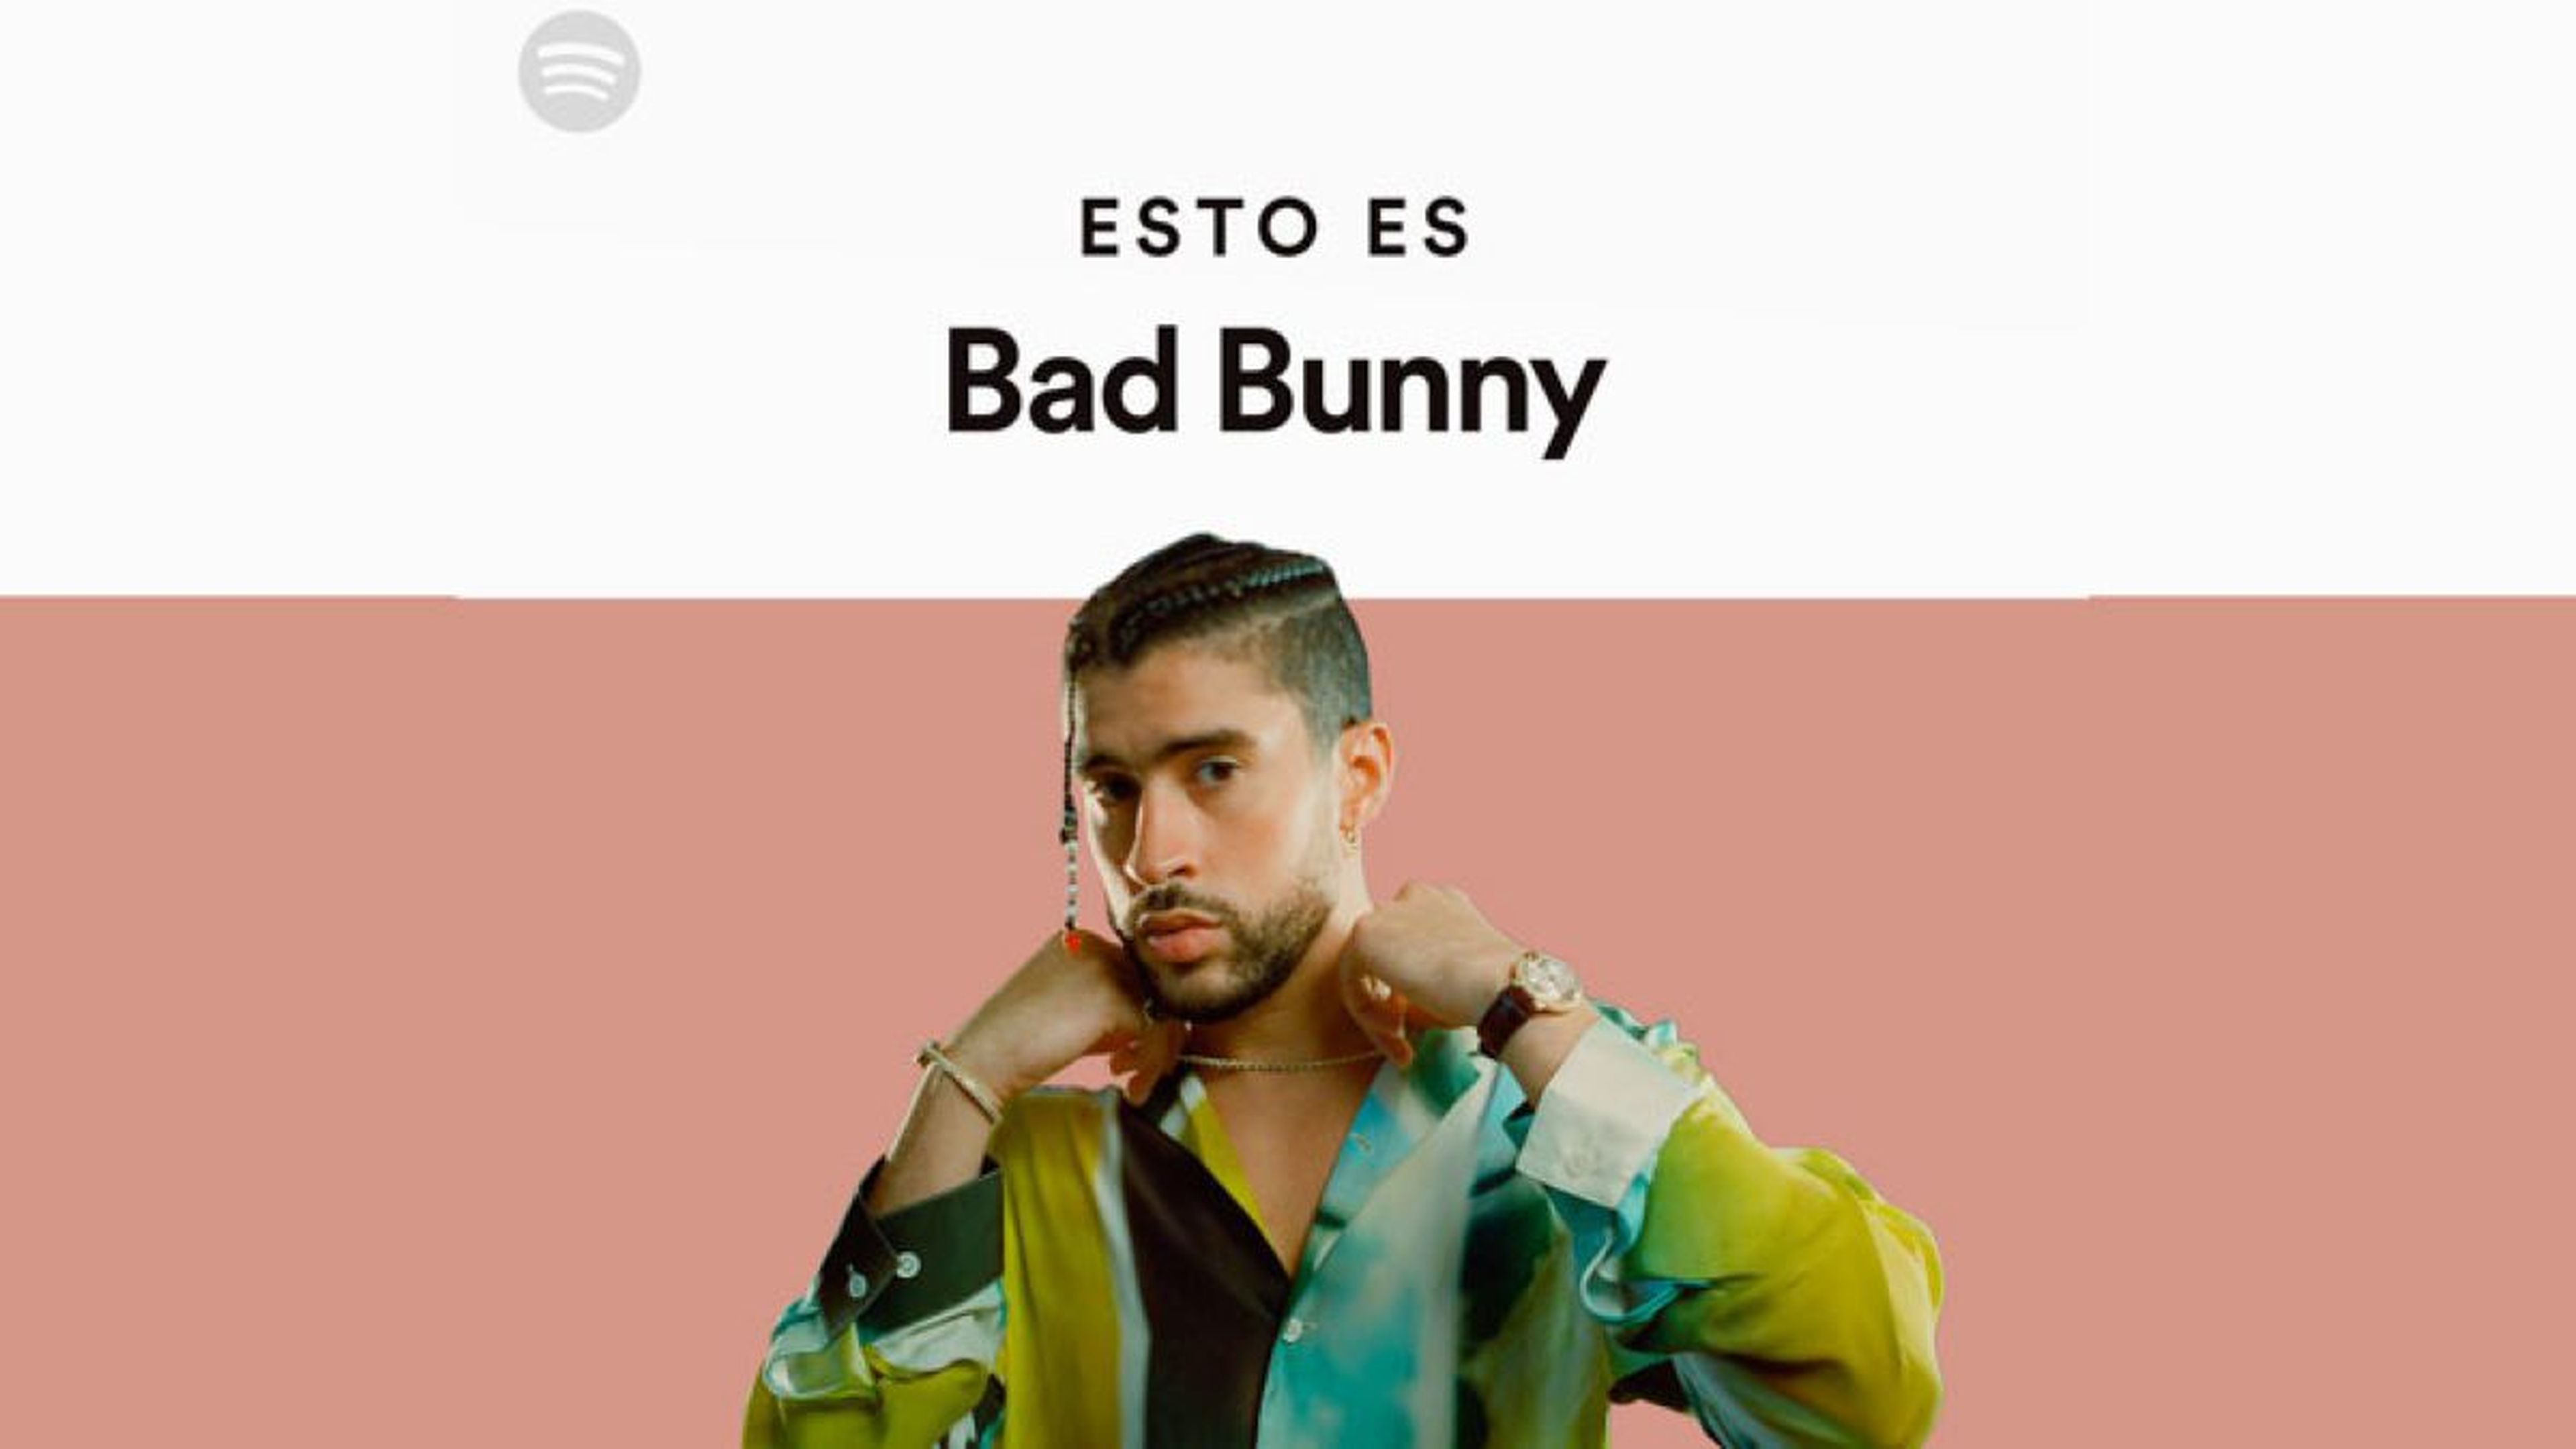 Bud Bunny arrasa en Spotify.